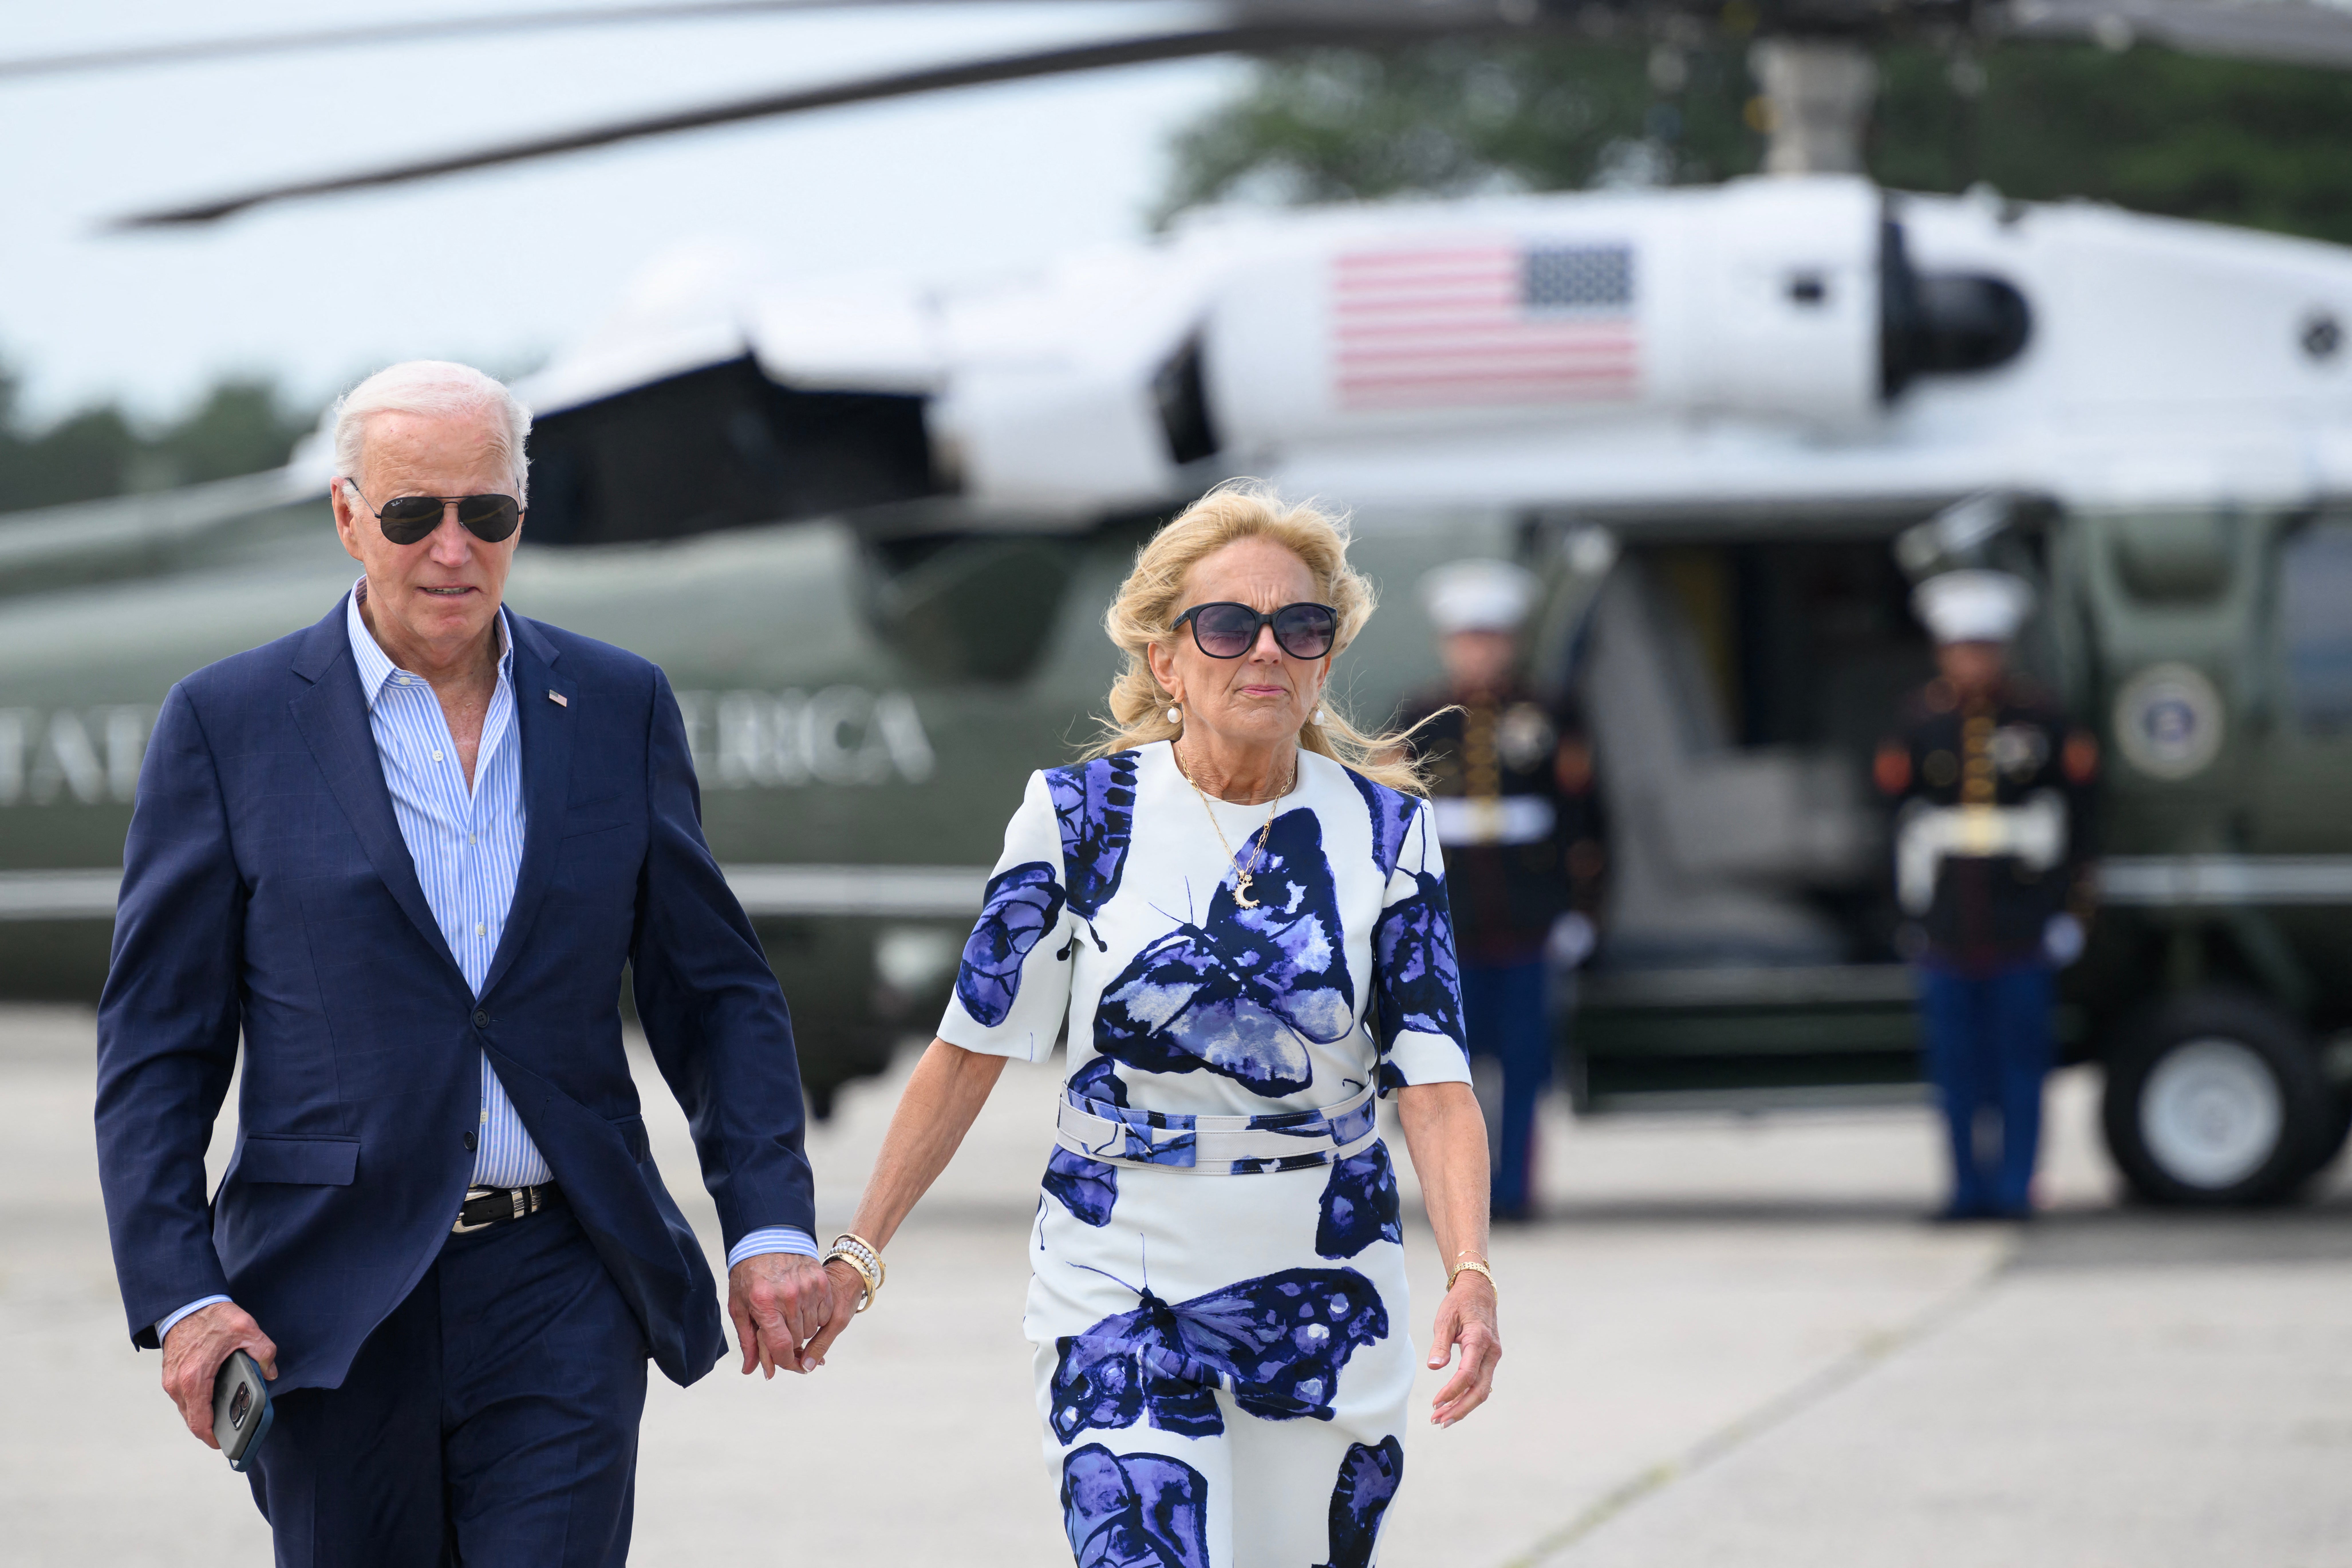 Joe Biden and wife Jill Biden walk to board Air Force One at Francis S Gabreski airport in New York